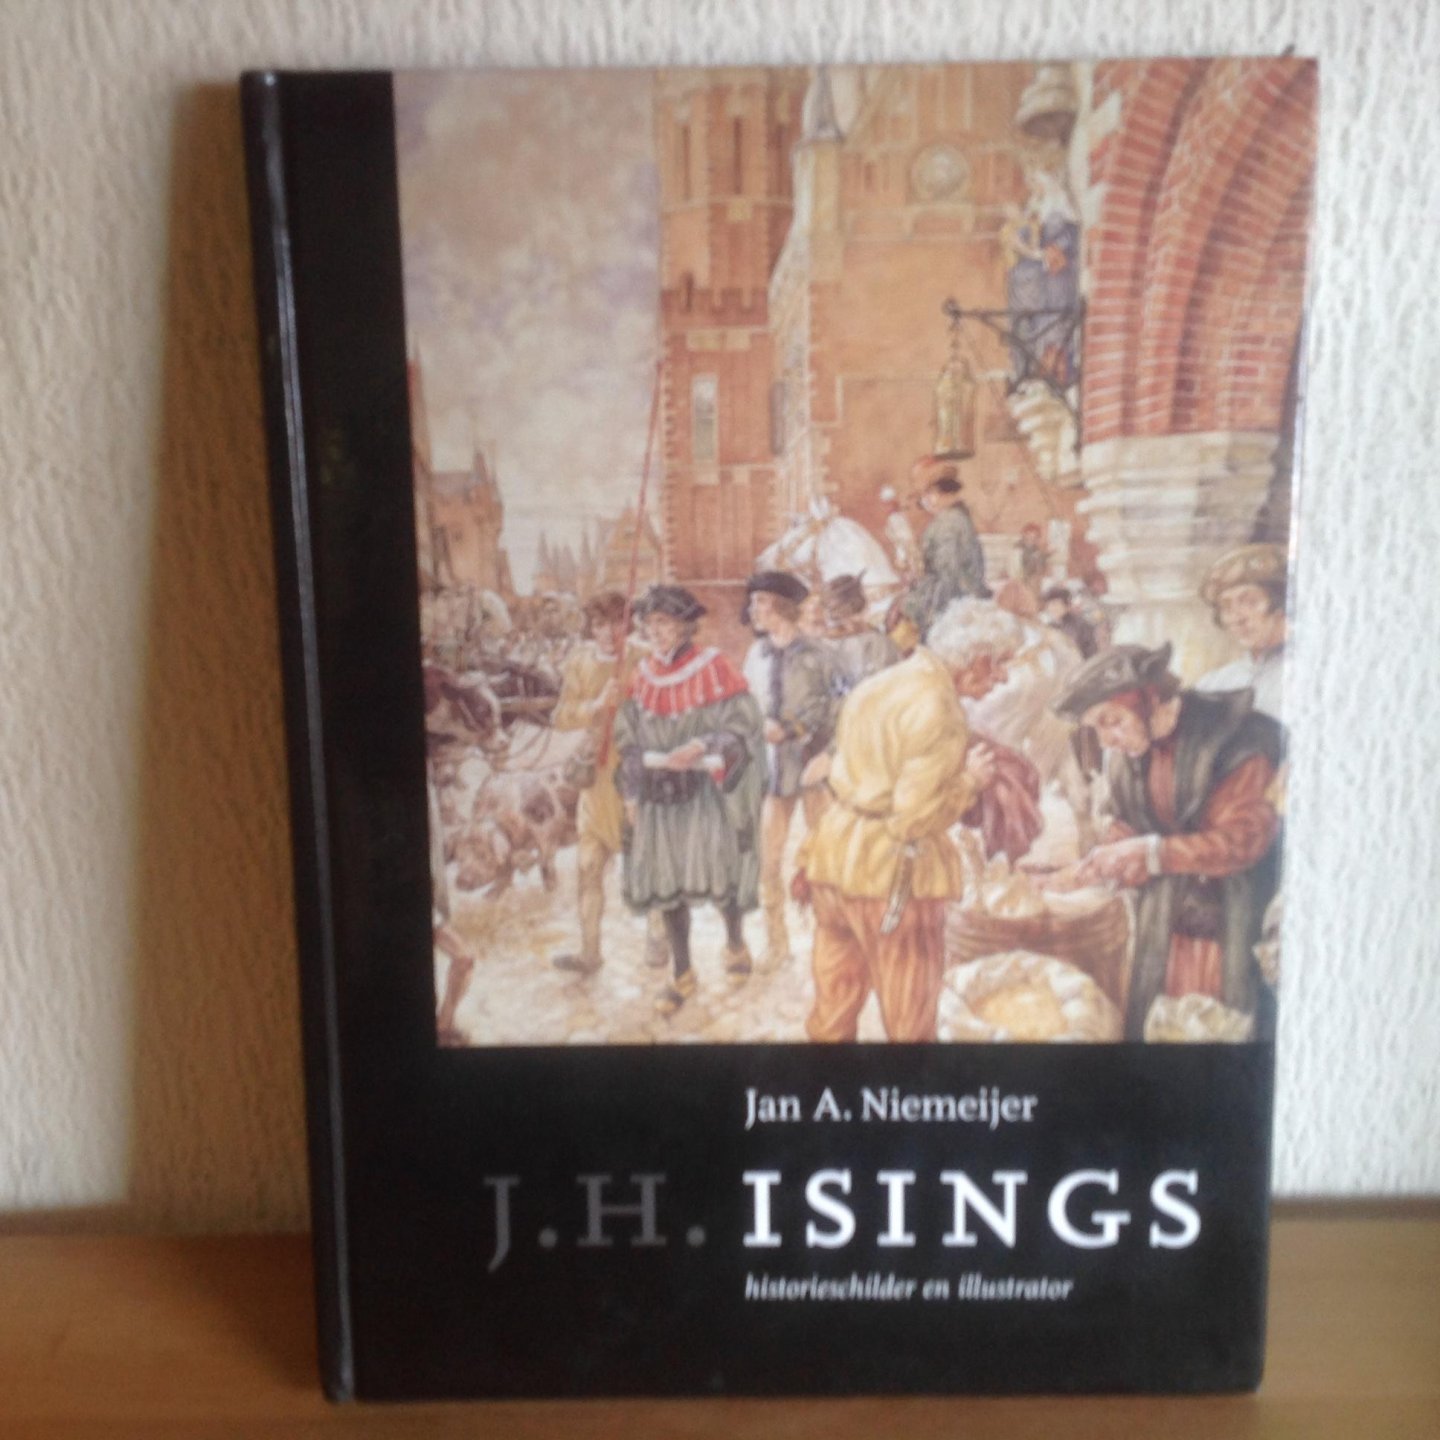 Niemeijer, J.A. - J.H. Isings / historieschilder en illustrator